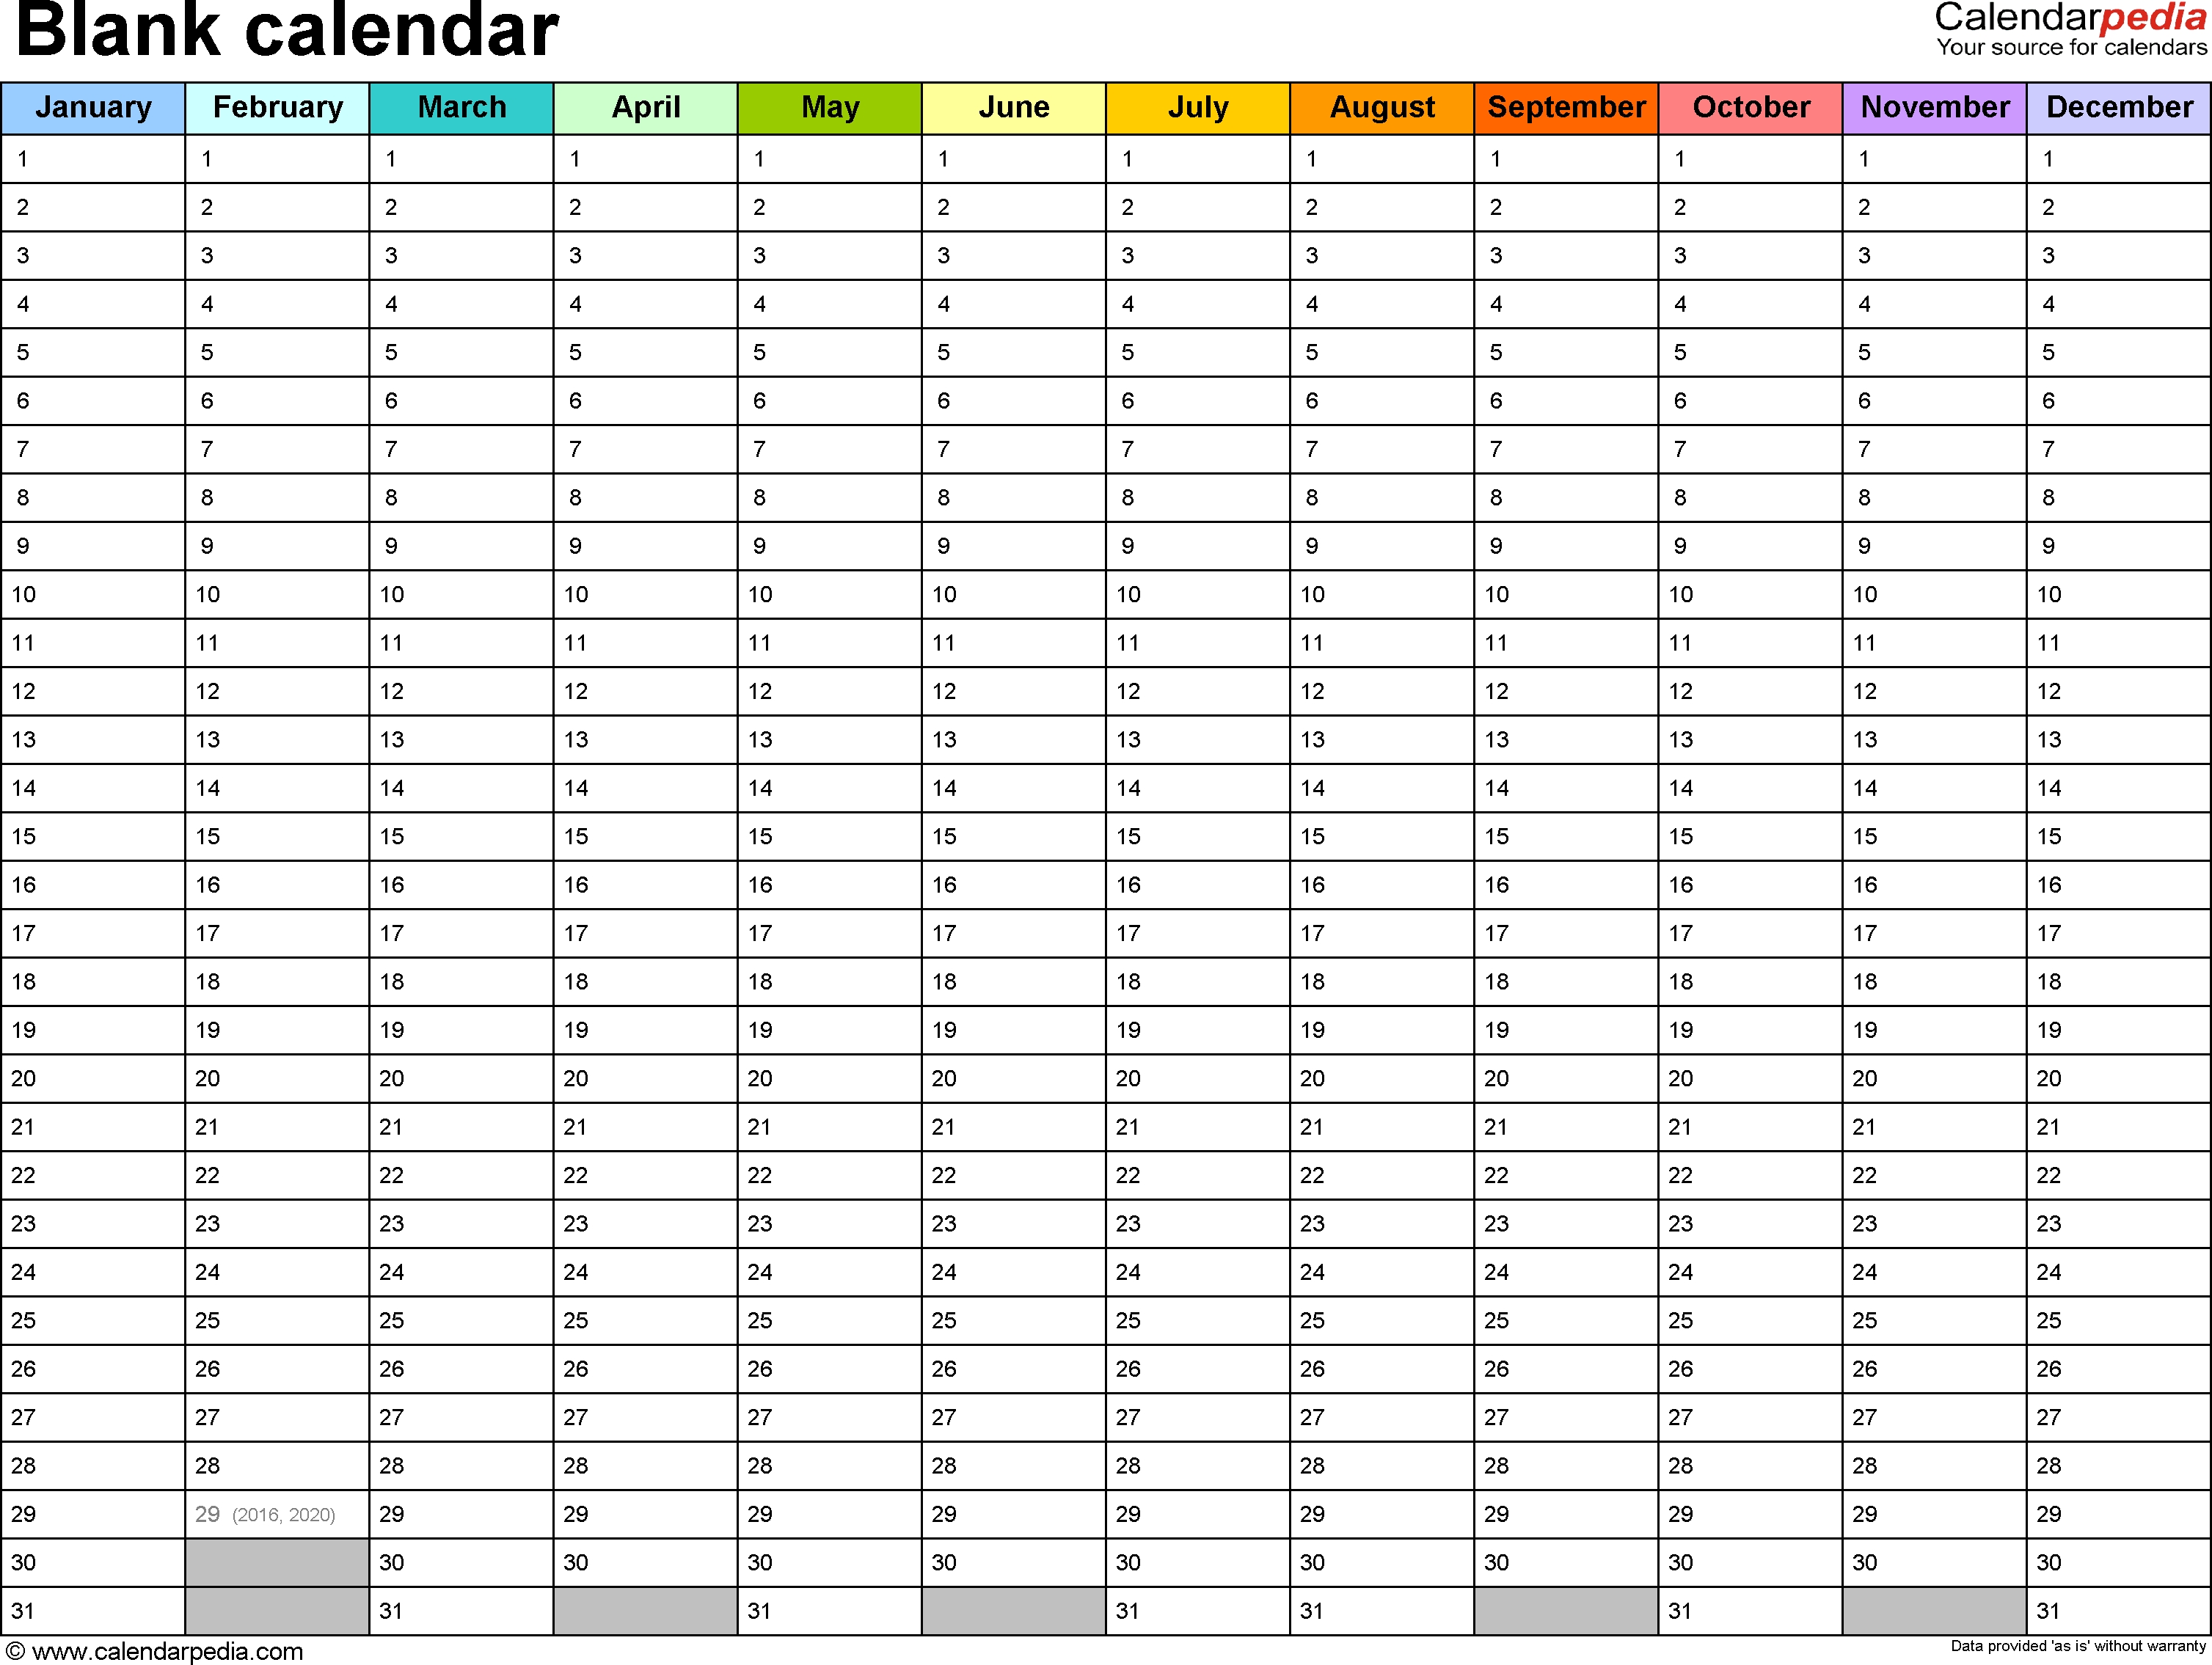 Blank Calendar - 9 Free Printable Microsoft Word Templates pertaining to Free 12 Month Birthday Calendar Template